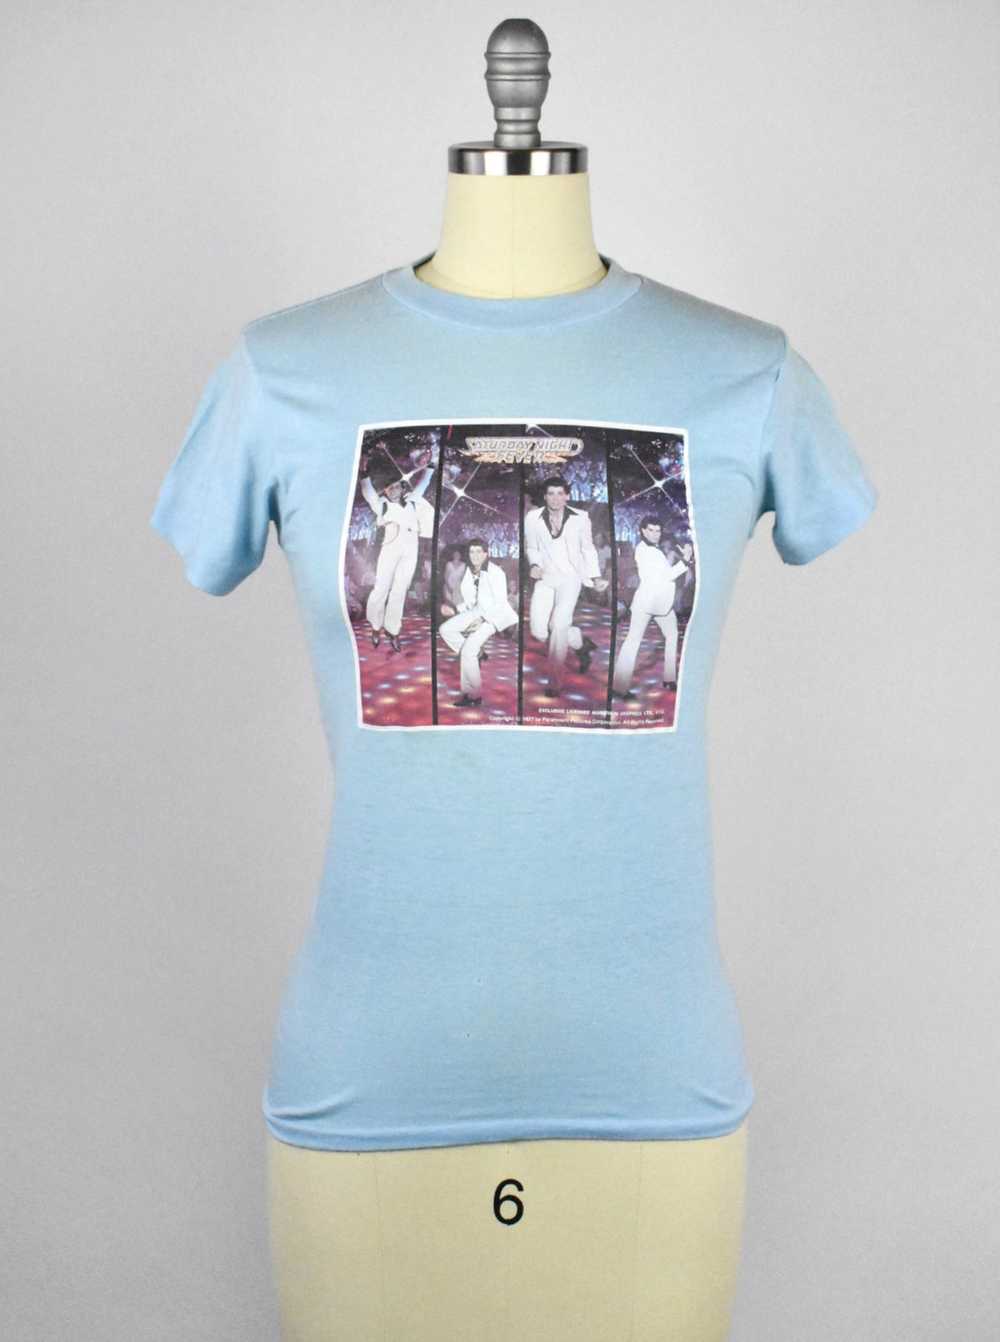 1977 John Travolta Saturday Night Fever T-shirt - image 1